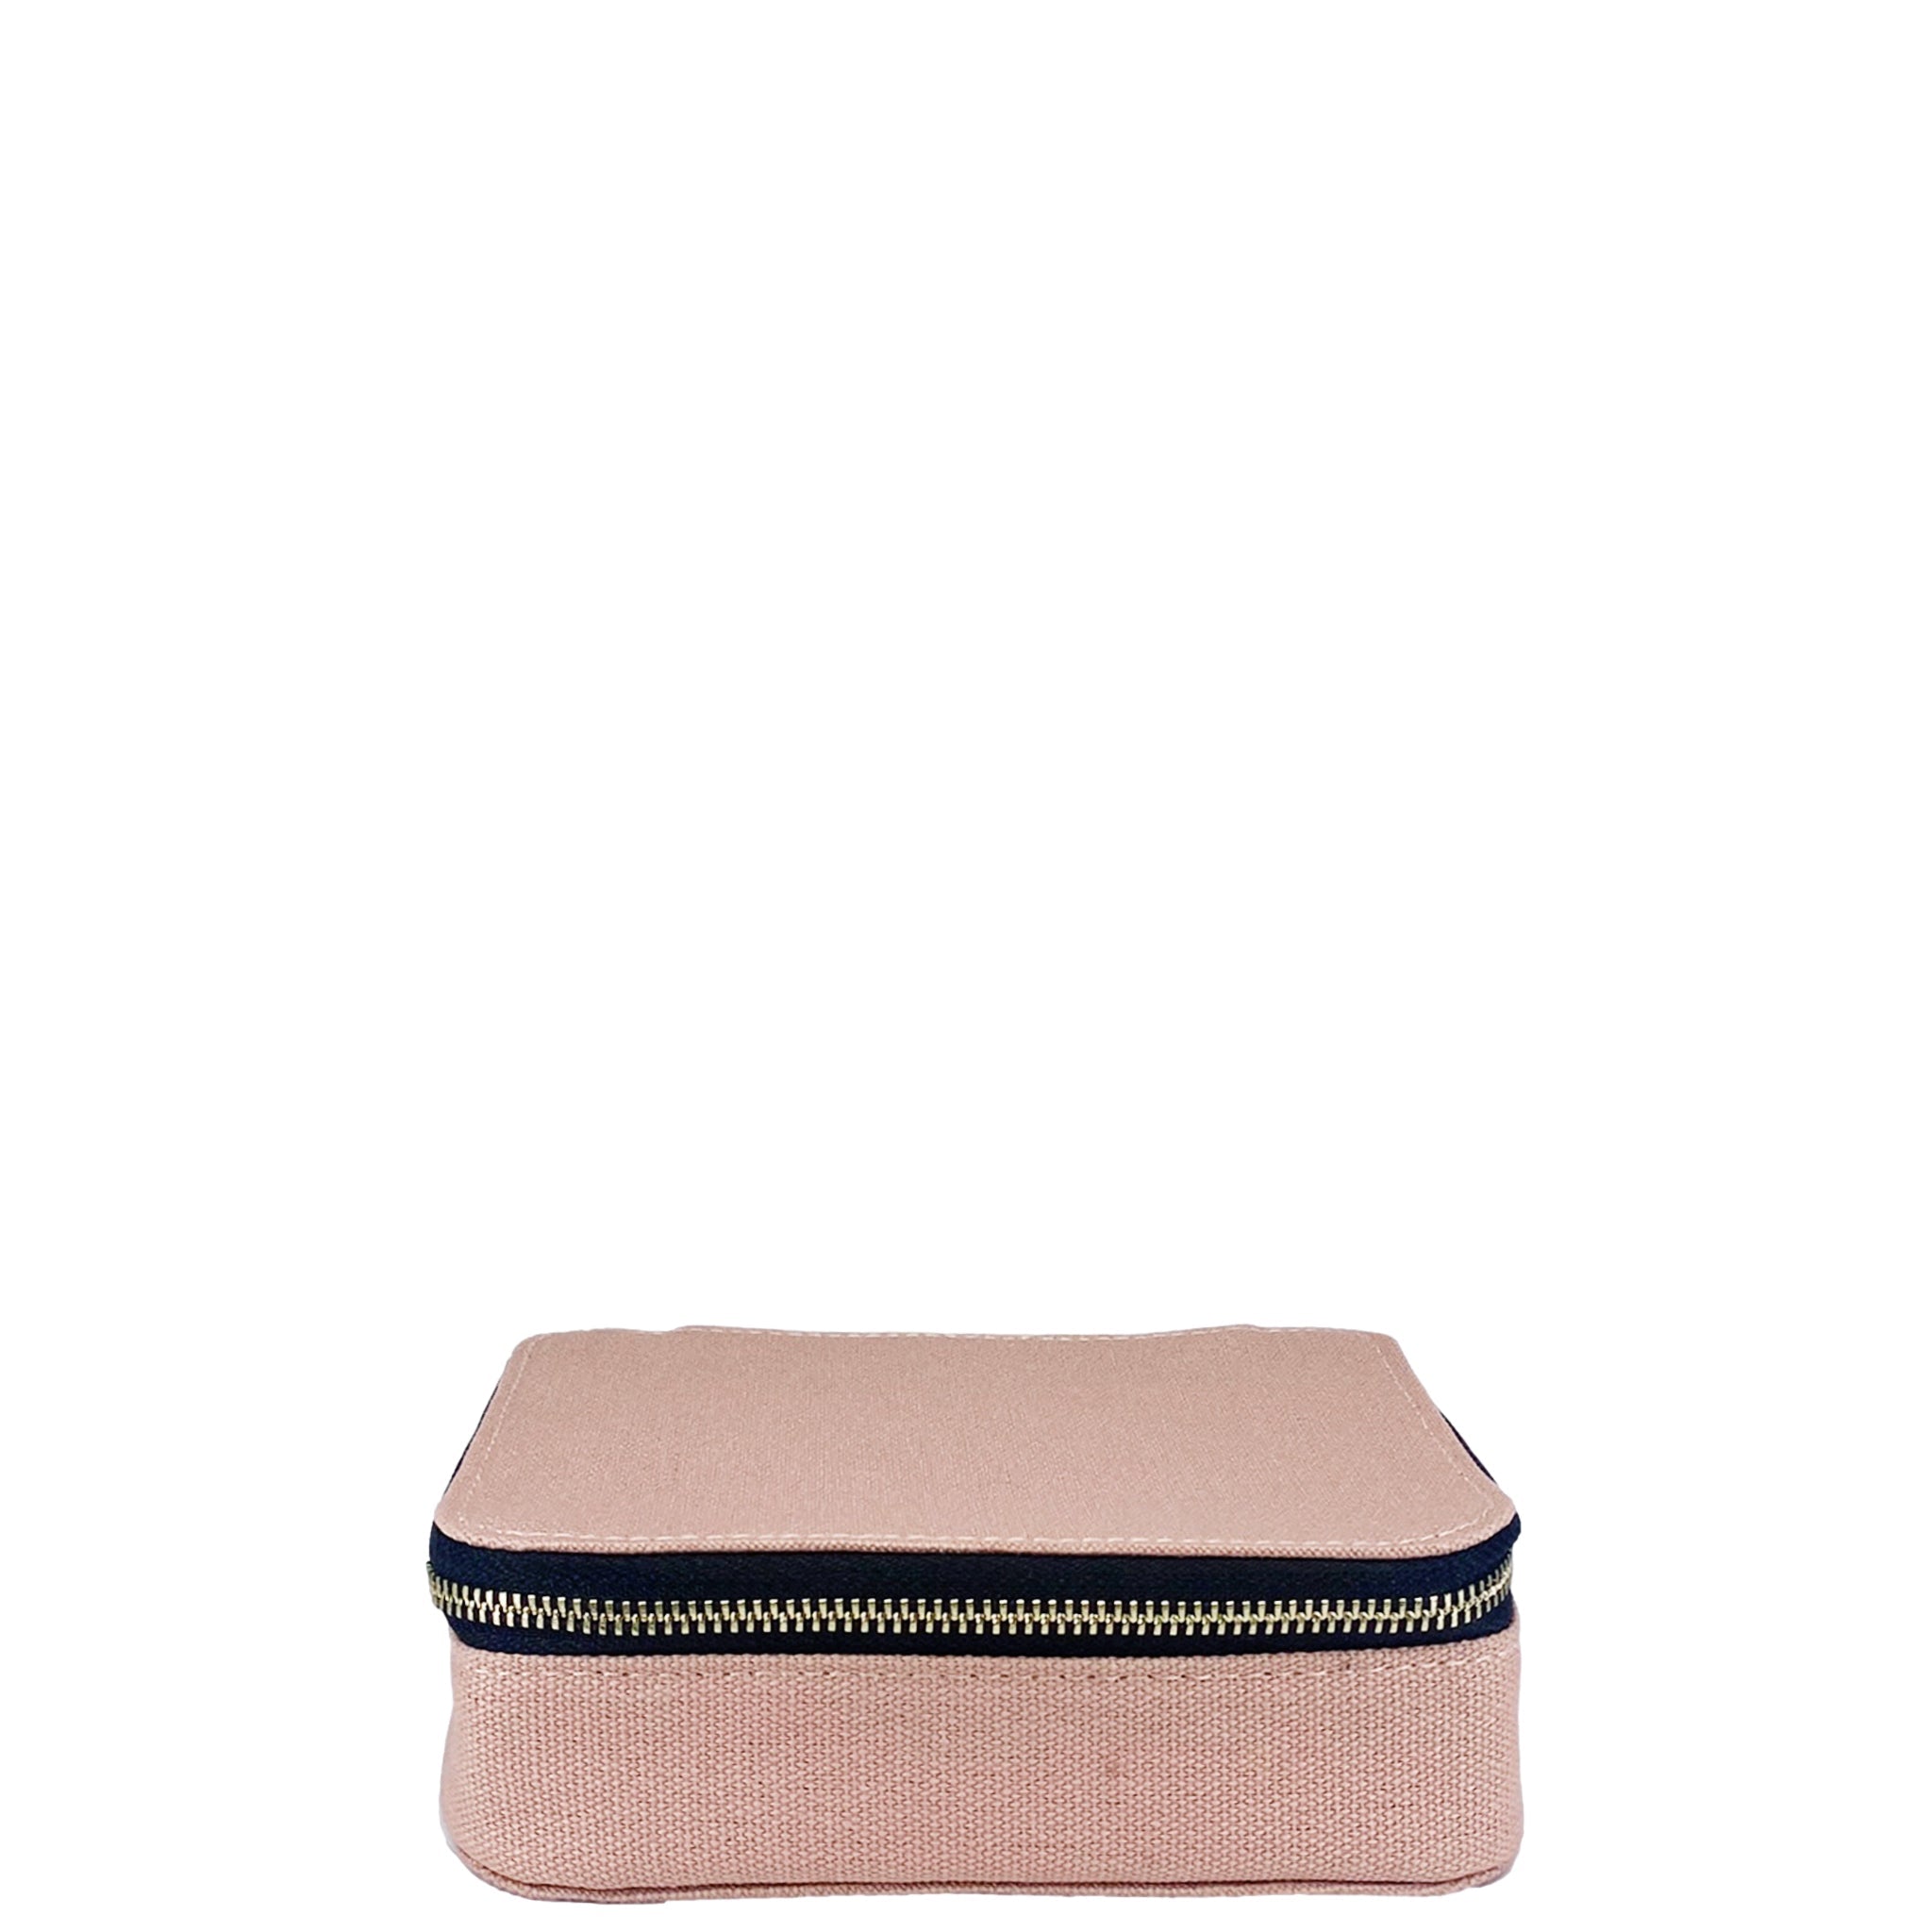 Makeup/Trinket Box, Pink/Blush | Bag-all